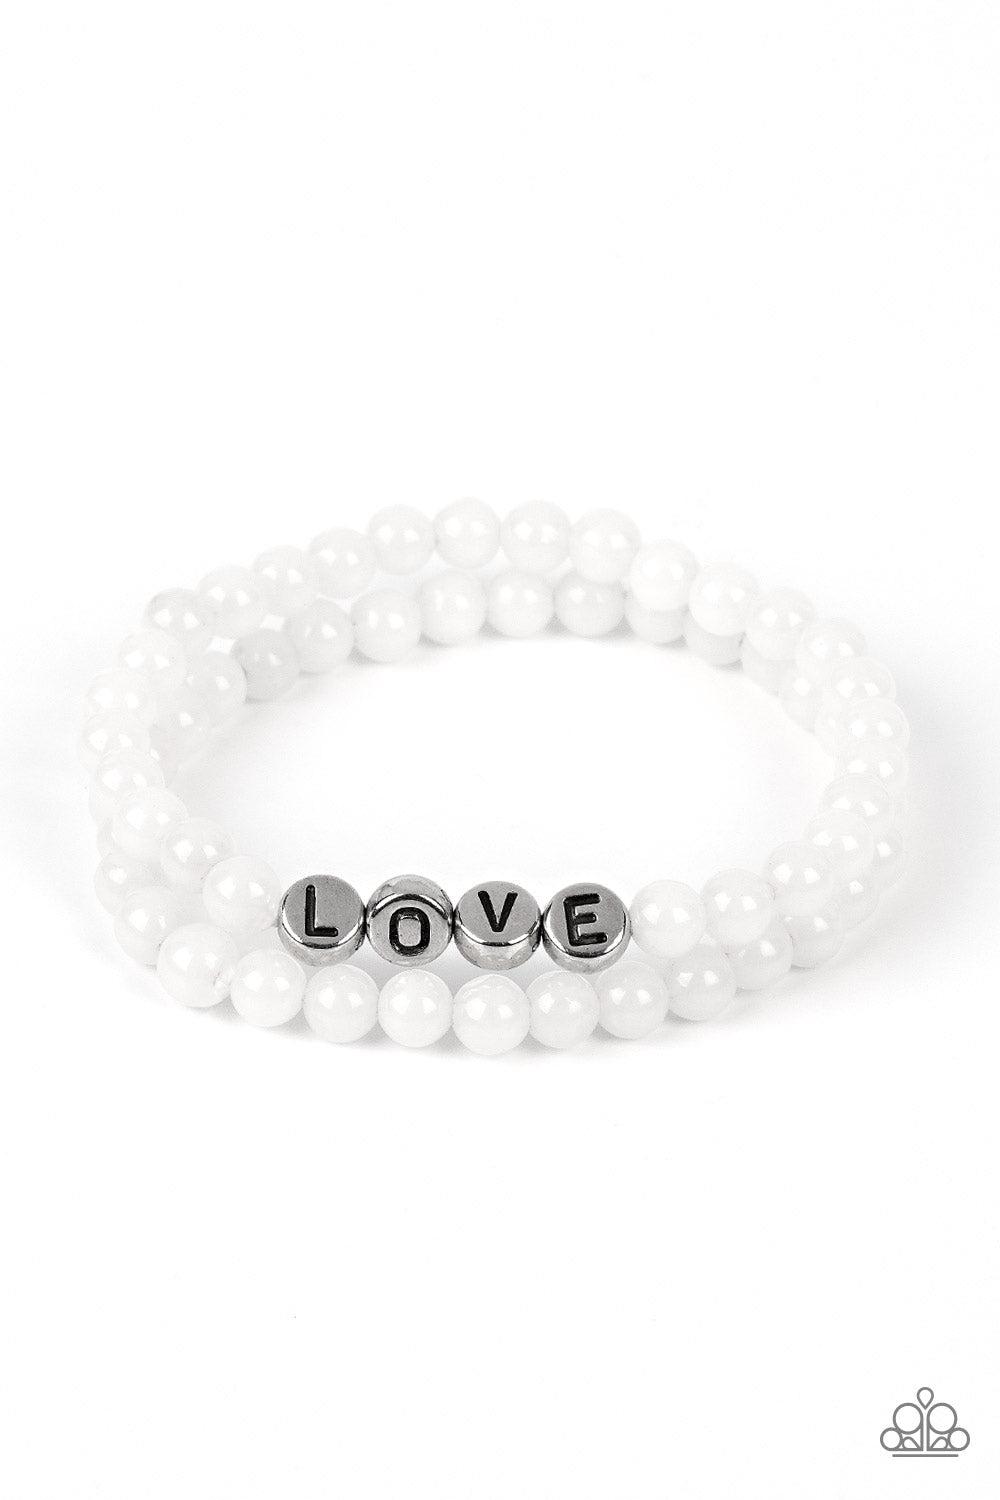 Devoted Dreamer White Inspirational Bracelet - Paparazzi Accessories- lightbox - CarasShop.com - $5 Jewelry by Cara Jewels